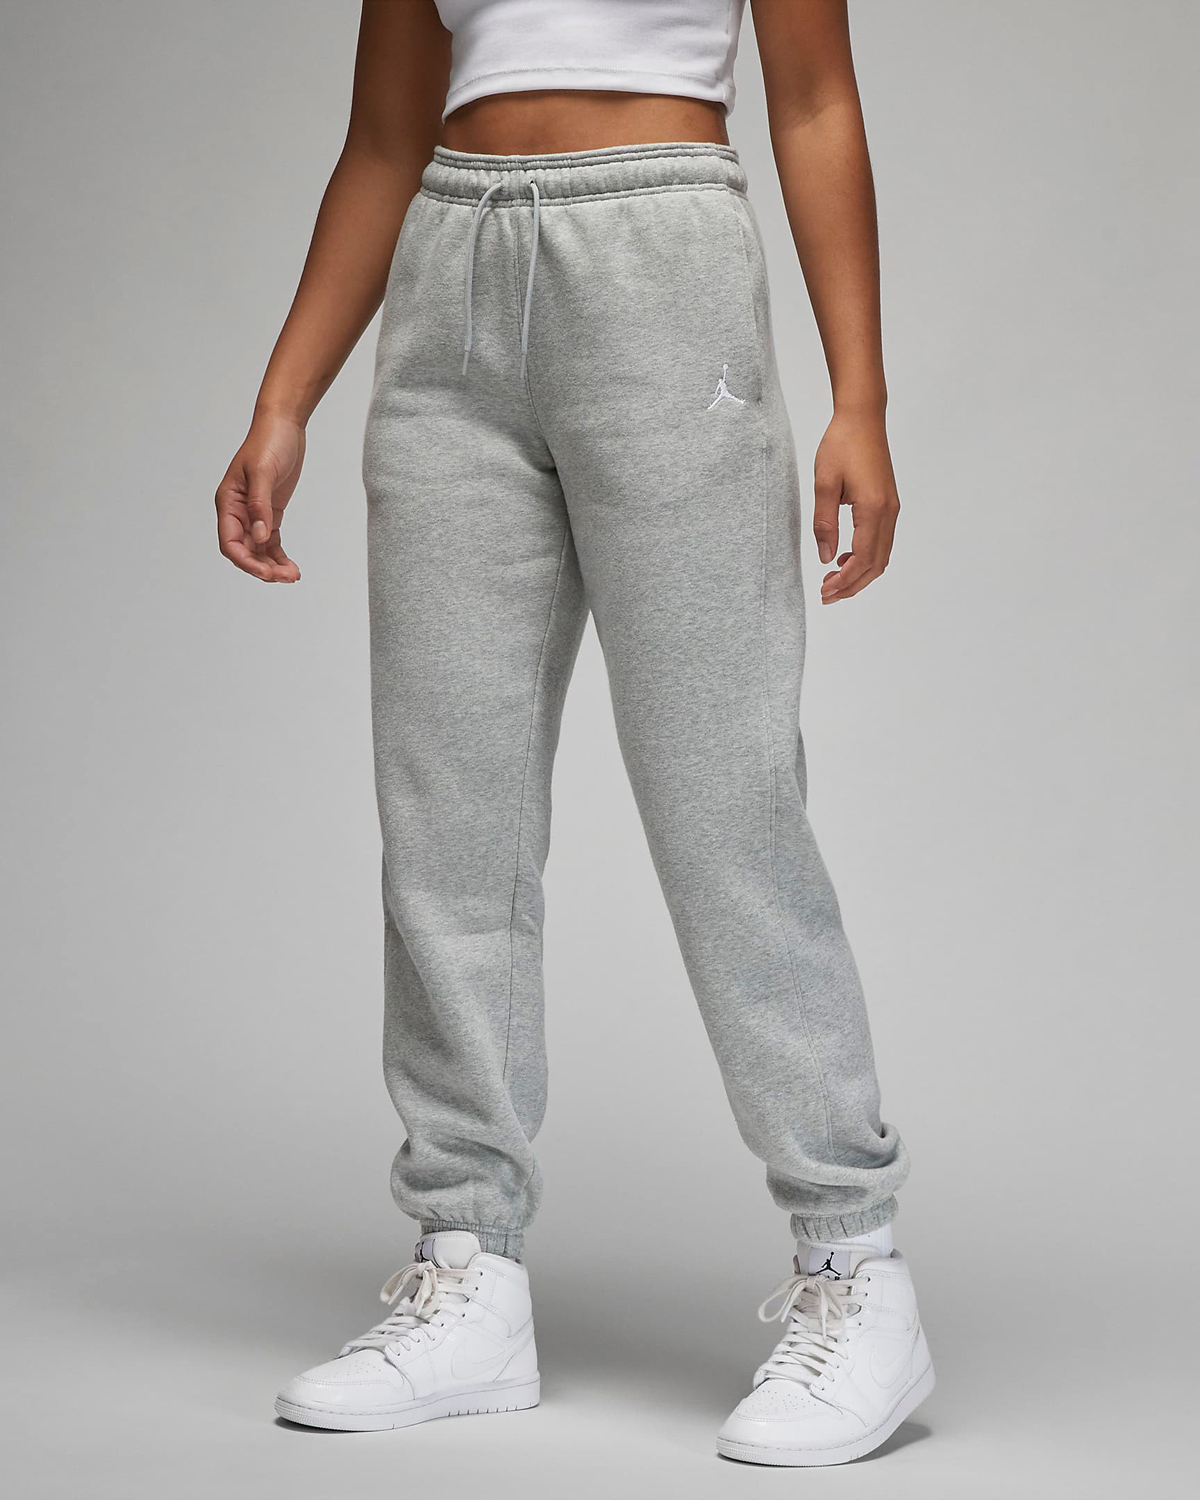 Jordan-Womens-Brooklyn-Fleece-Pants-Dark-Grey